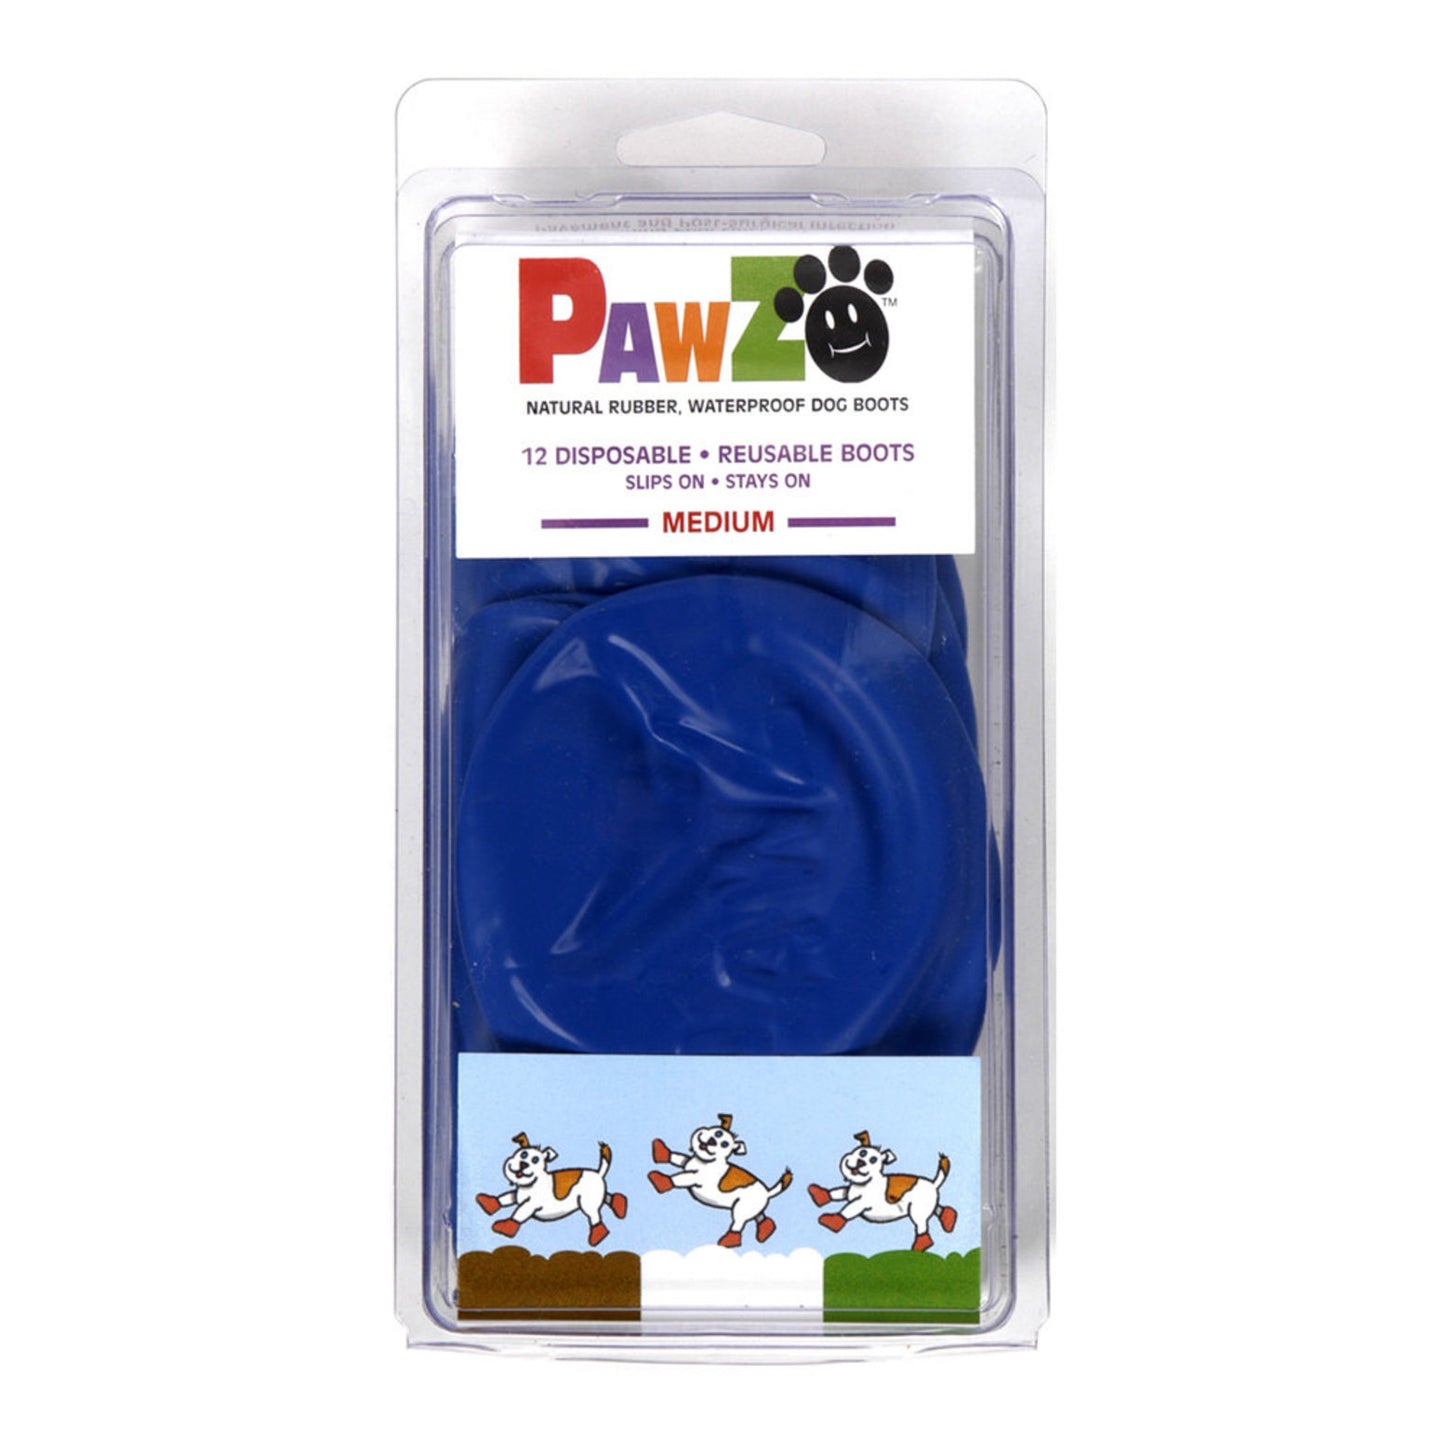 PawZ Boots - Medium - Chubbs Bars, Toys - pet shampoo, Woofur - Chubbs Bars Company, Woofur Natural Pet Products - Chubbs Bars Canada